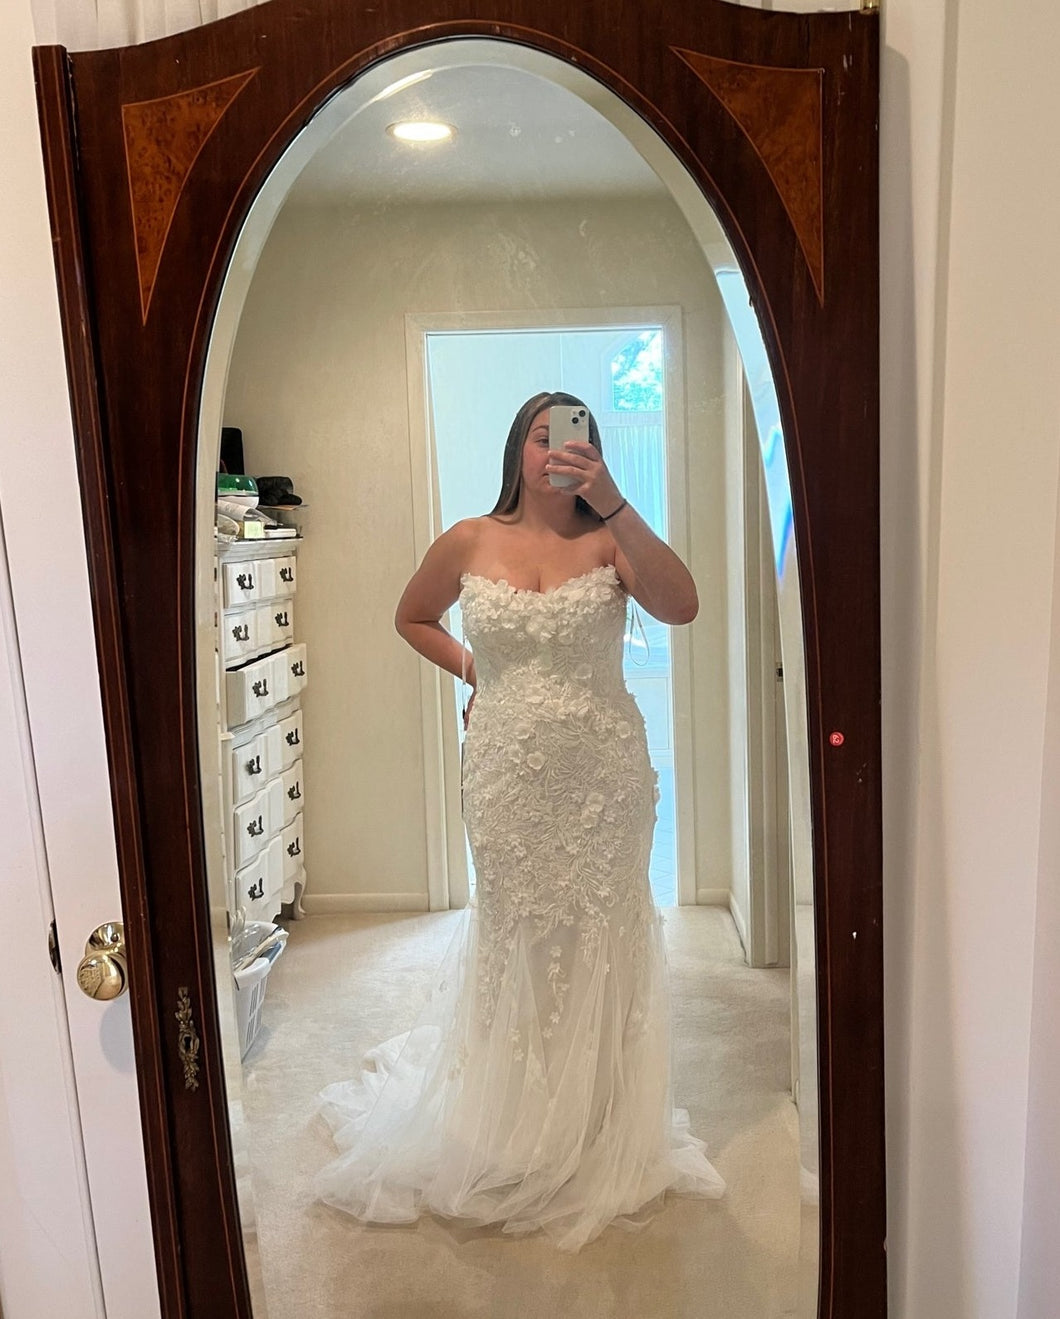 Dany Tabet 'Isobel' wedding dress size-10 NEW